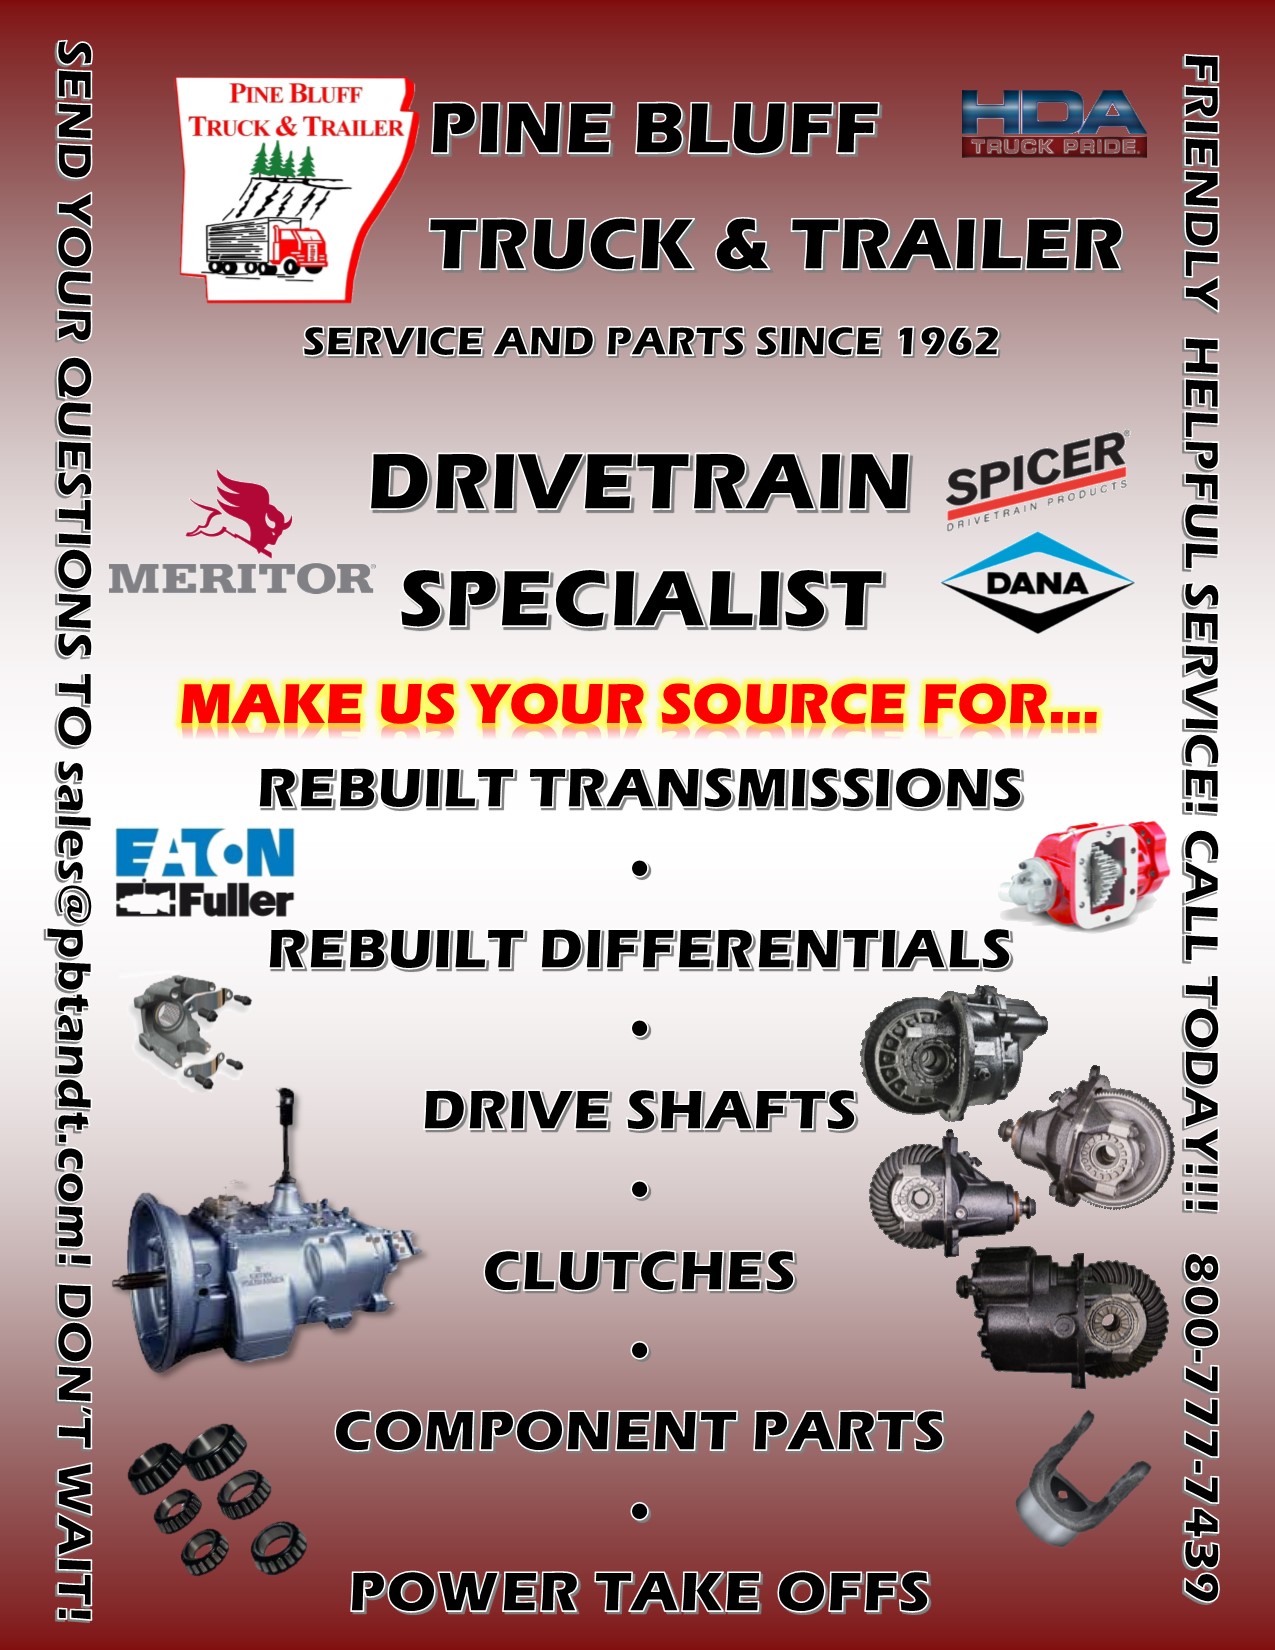 Drivetrain Specialist Services